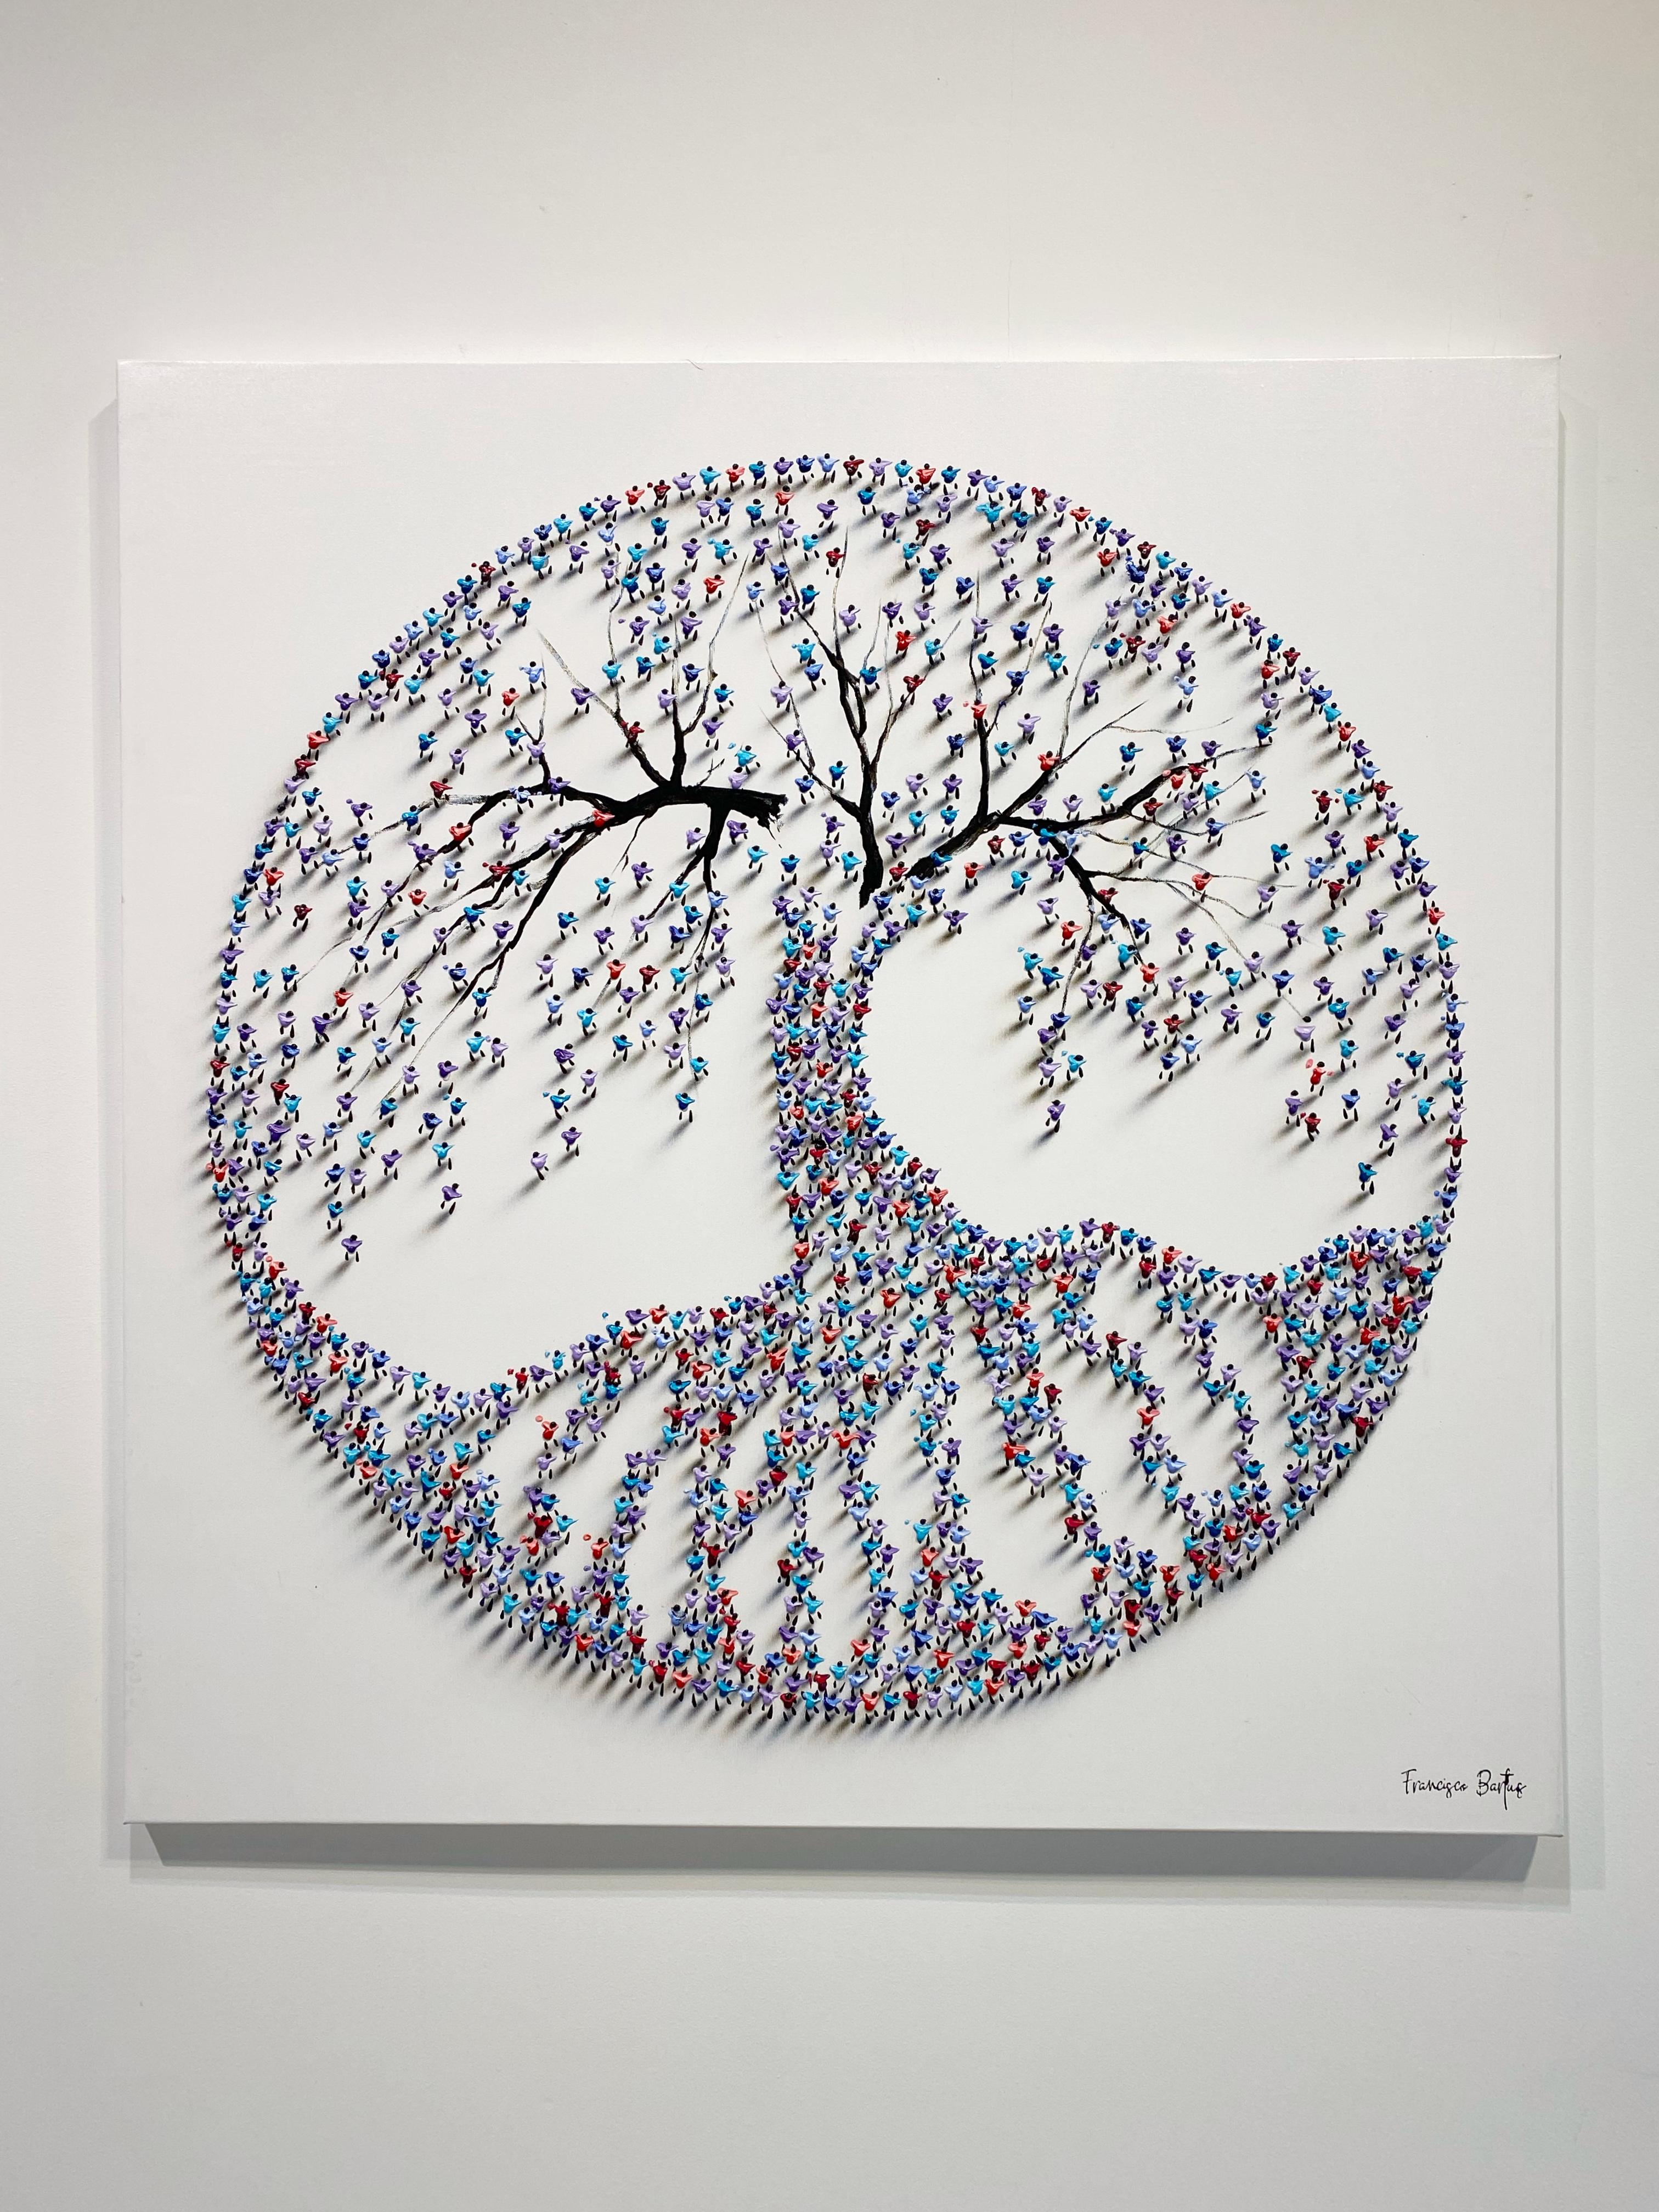 Francisco Bartus Abstract Painting - Tree of Life